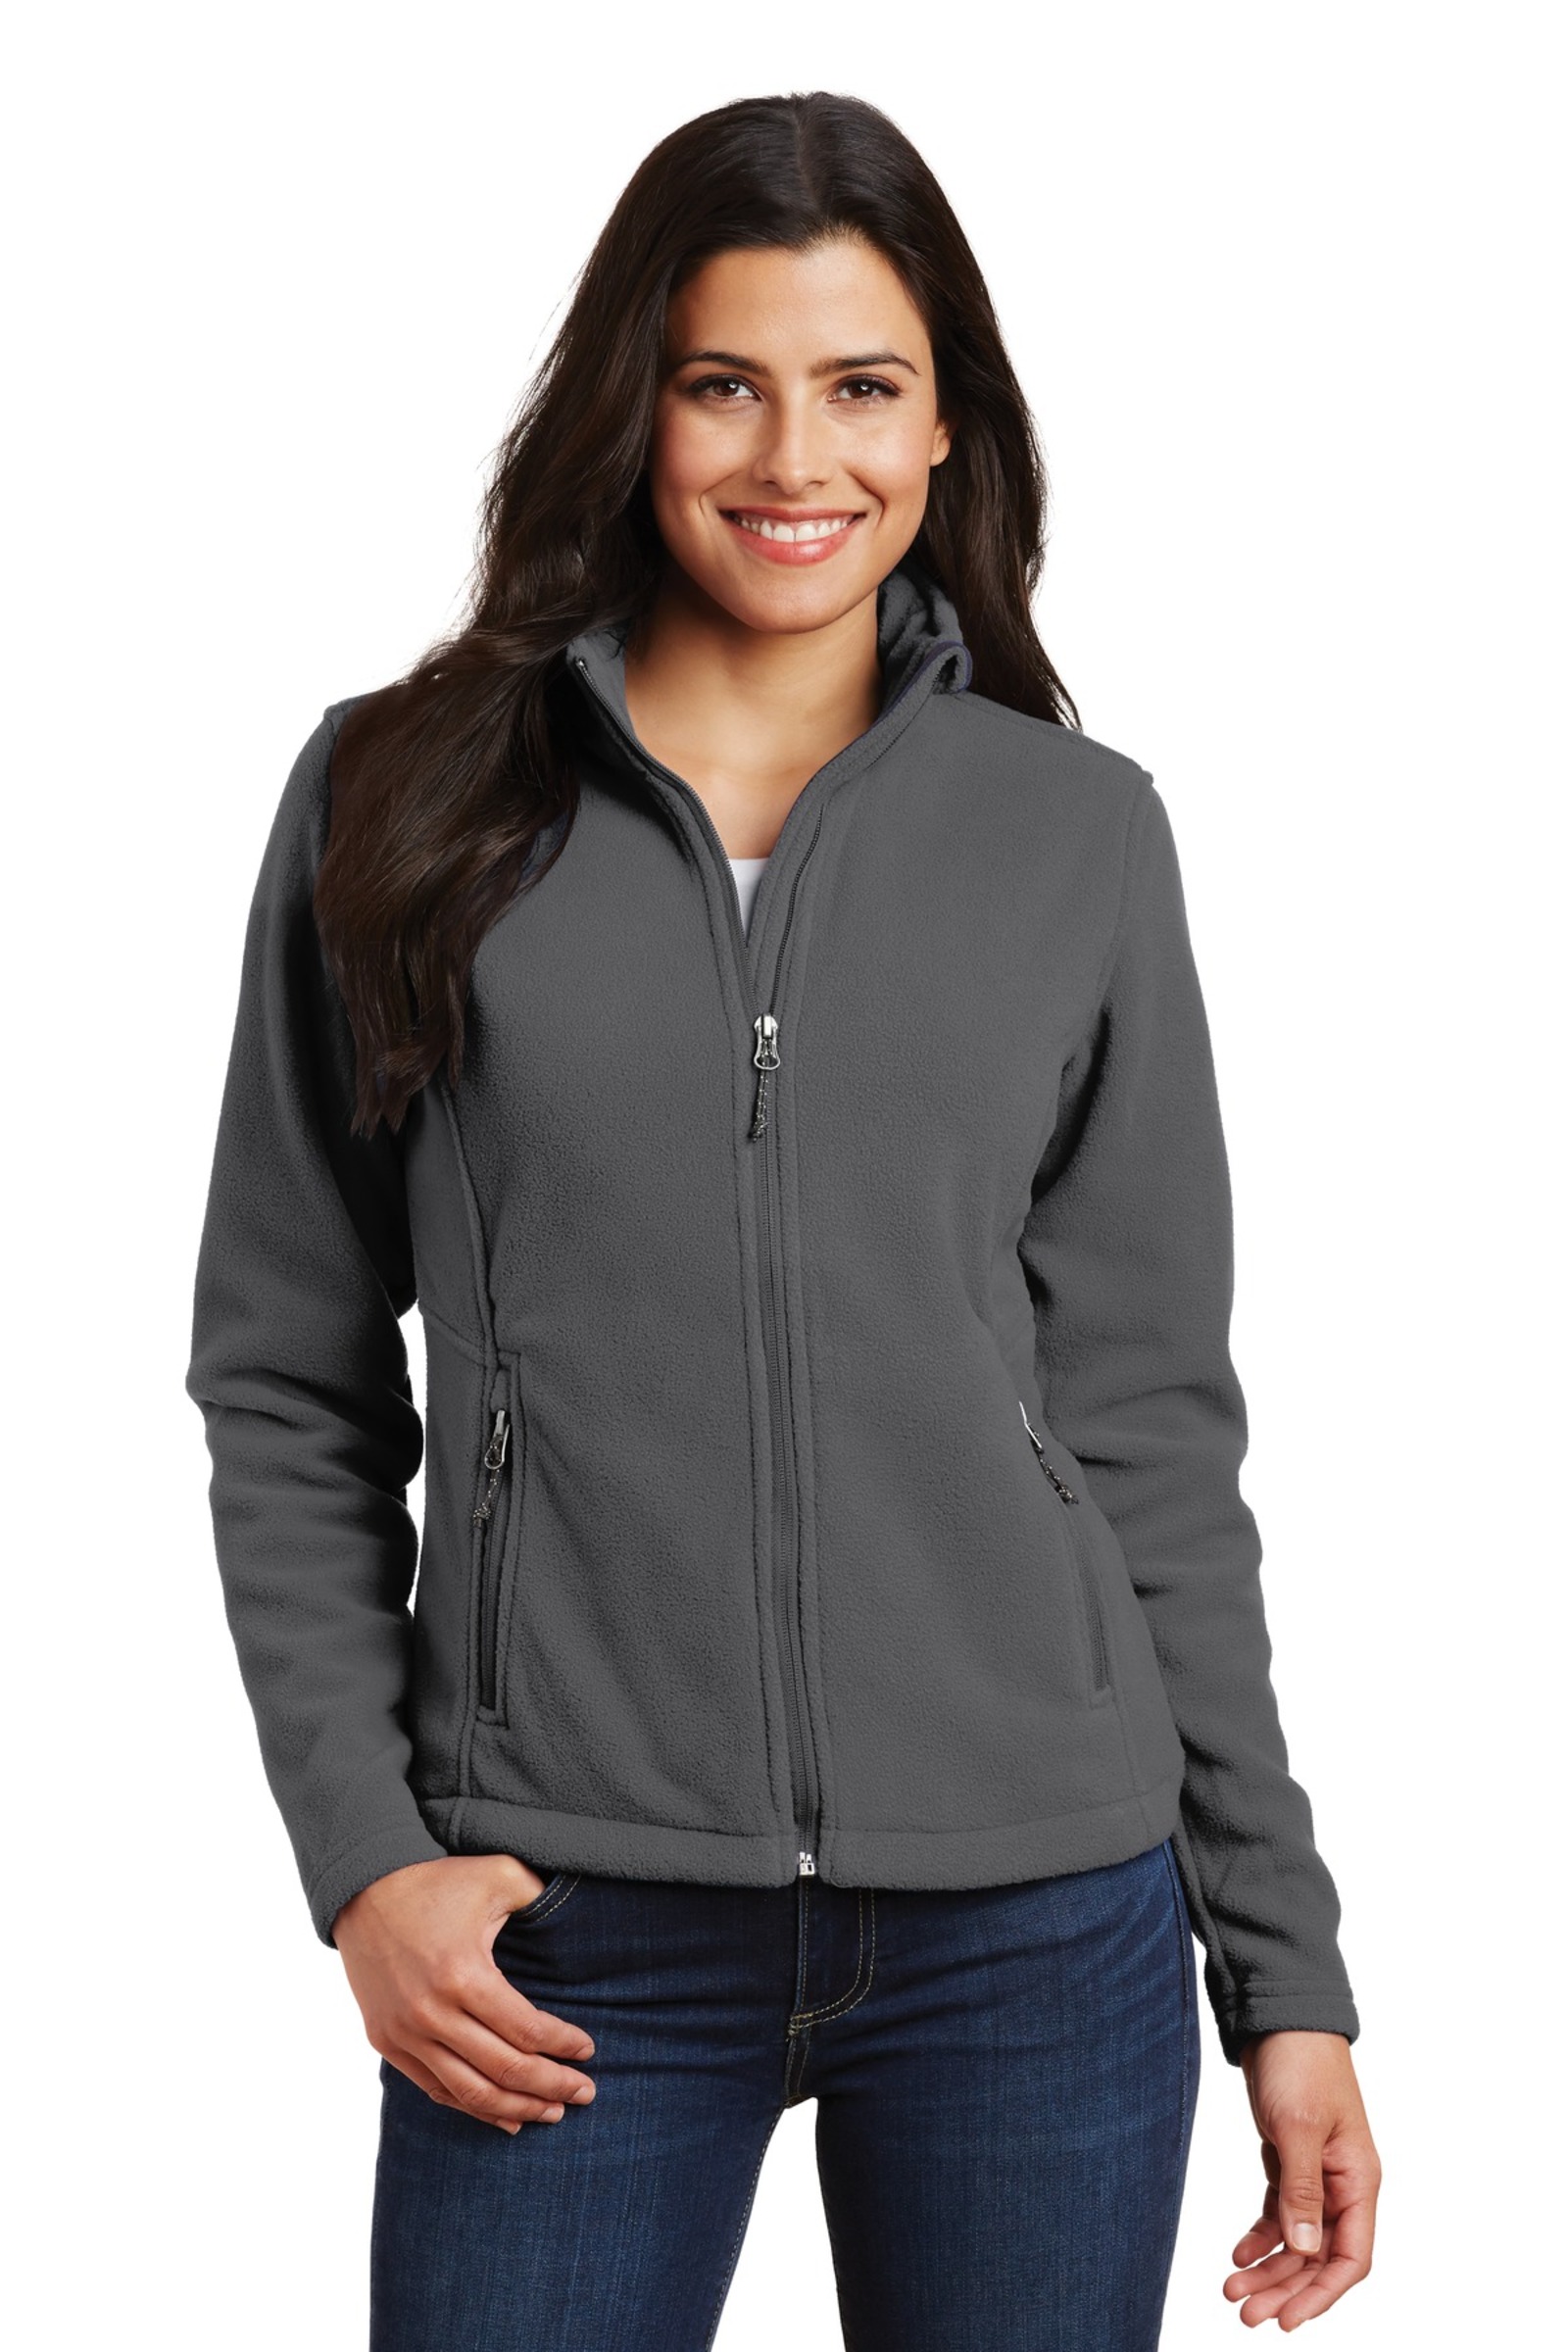 Port Authority Embroidered Women's Value Fleece Jacket | Fleece Apparel ...